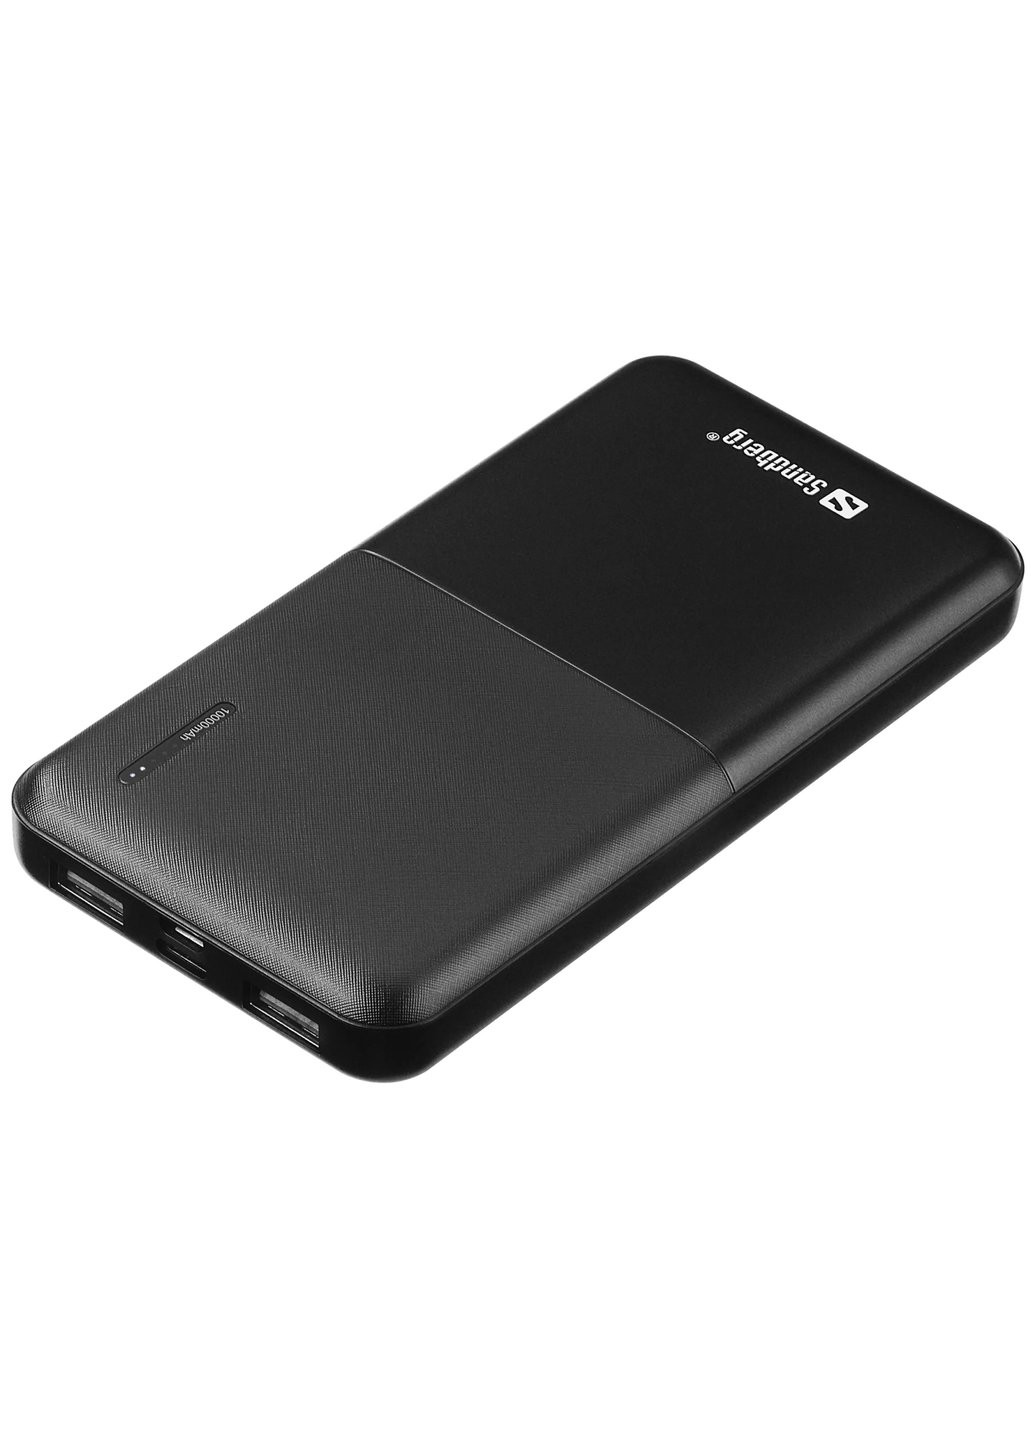 Батарея универсальная 10000mAh, Saver, USB-C, Micro-USB, output: USB-A*2 Total 5V/2.4A (320-34) Sandberg